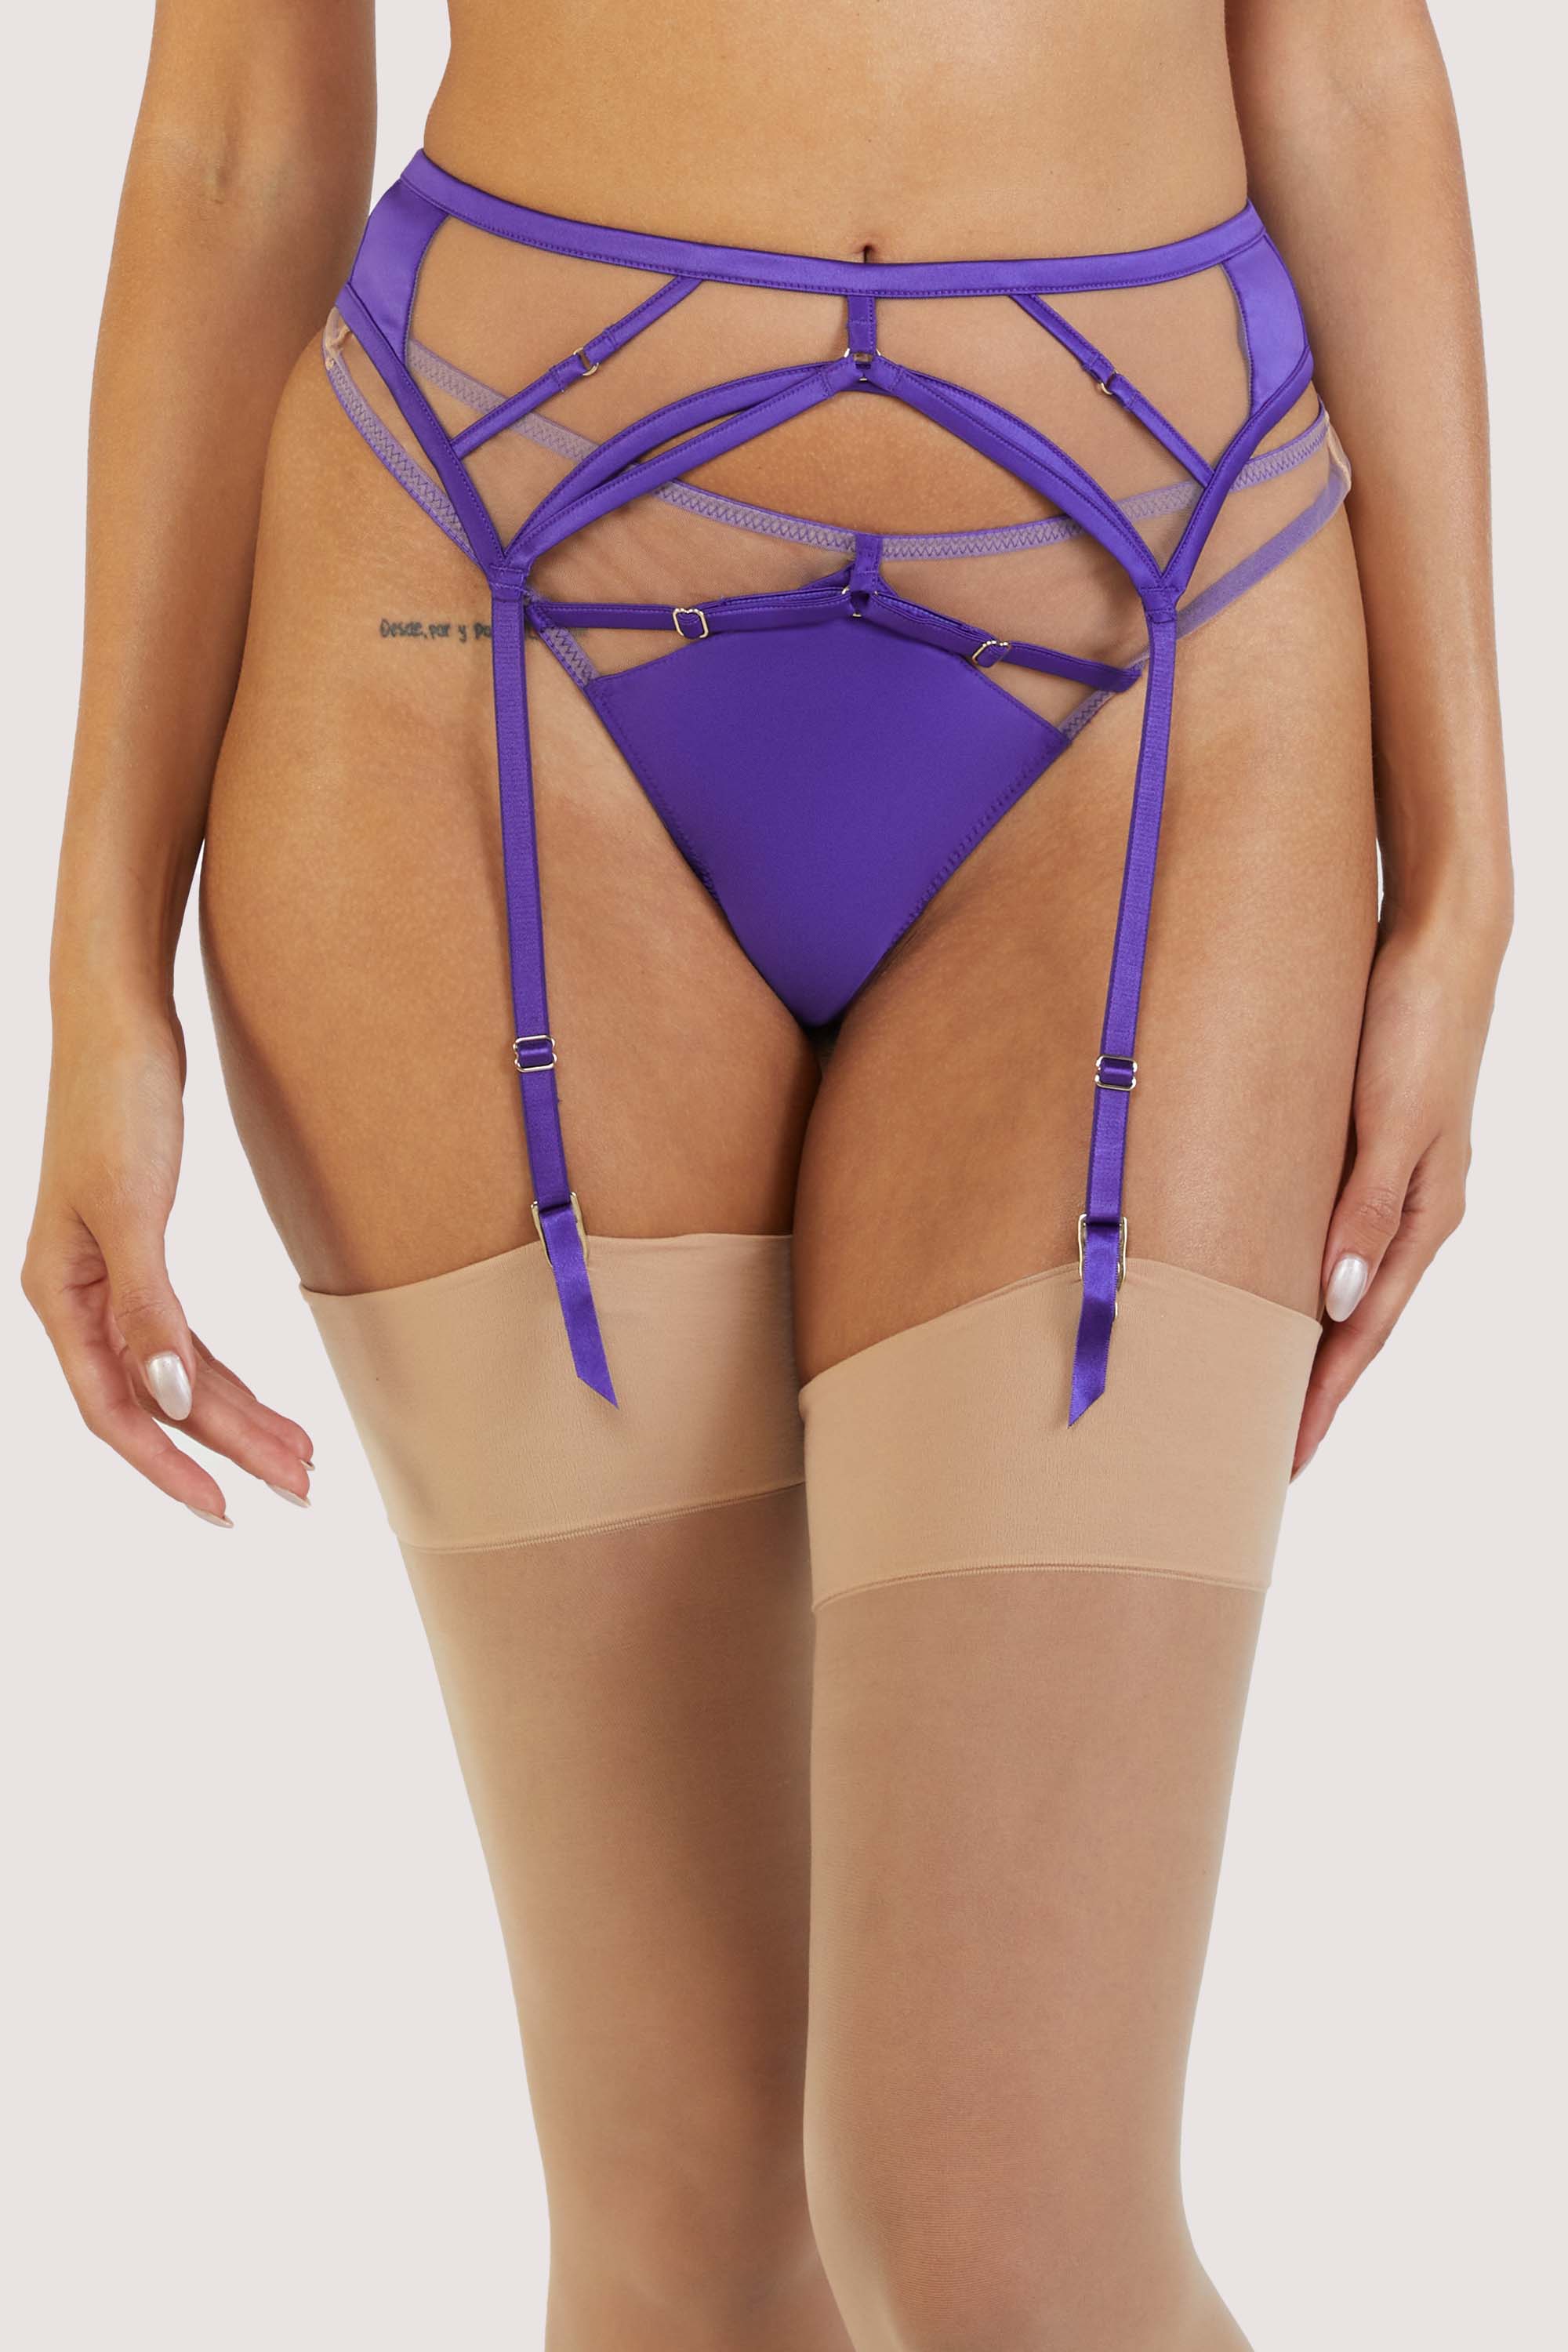 Ramona Purple Strap Detail Illusion Mesh Suspender 14